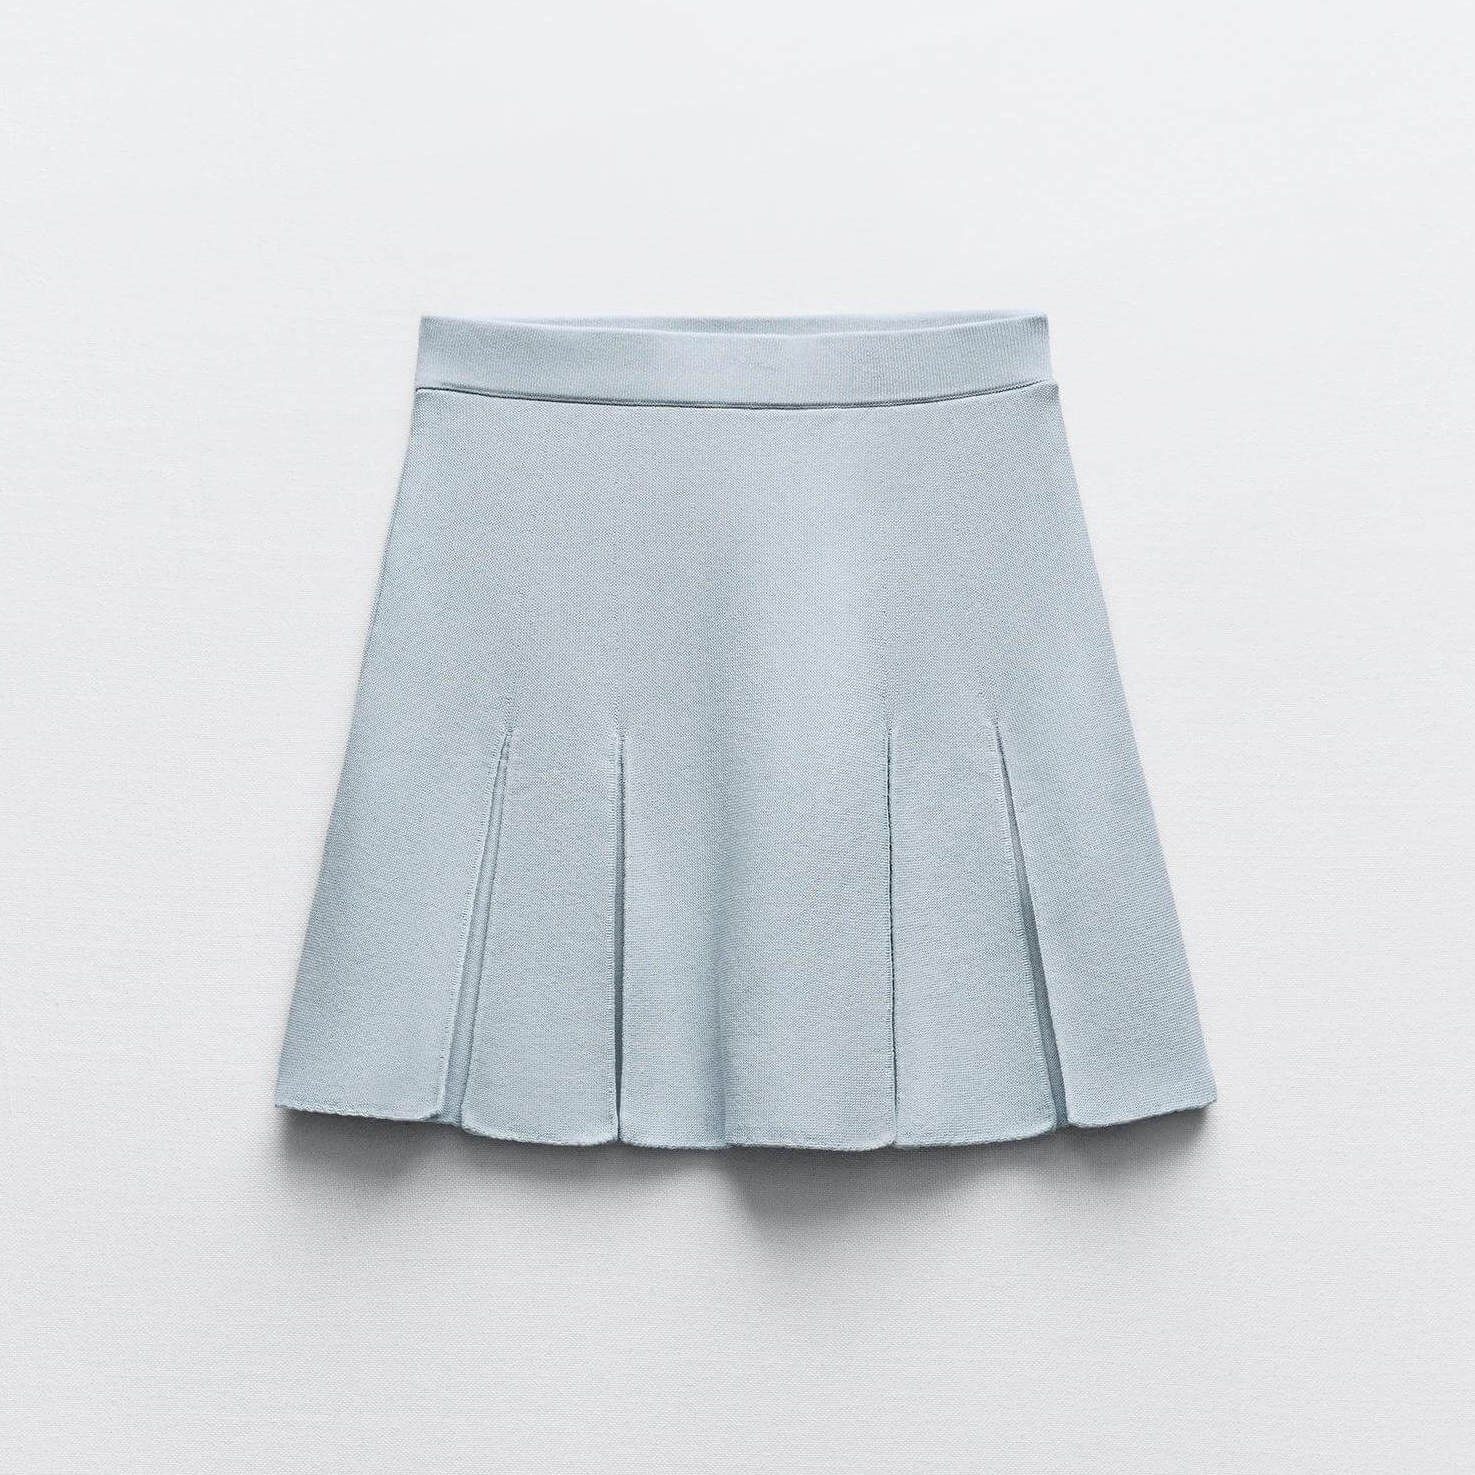 Юбка-мини Zara Box Pleat Knit, голубой inspire юбка длины мини в складку черный